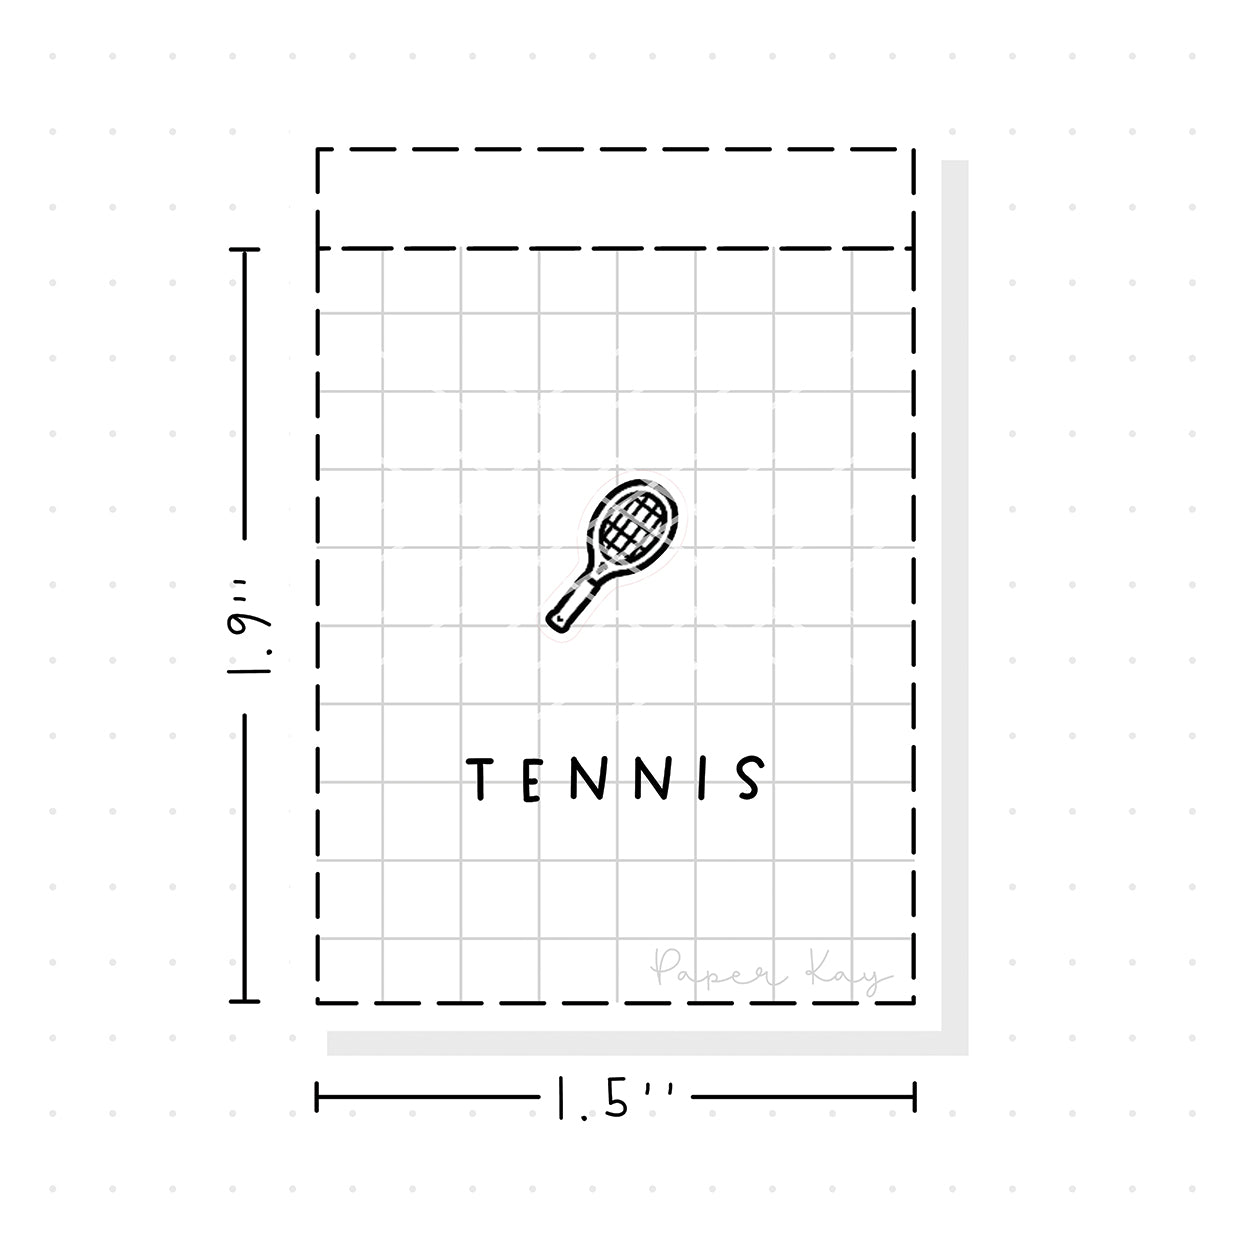 (PM221) Tennis - Tiny Minimal Icon Stickers